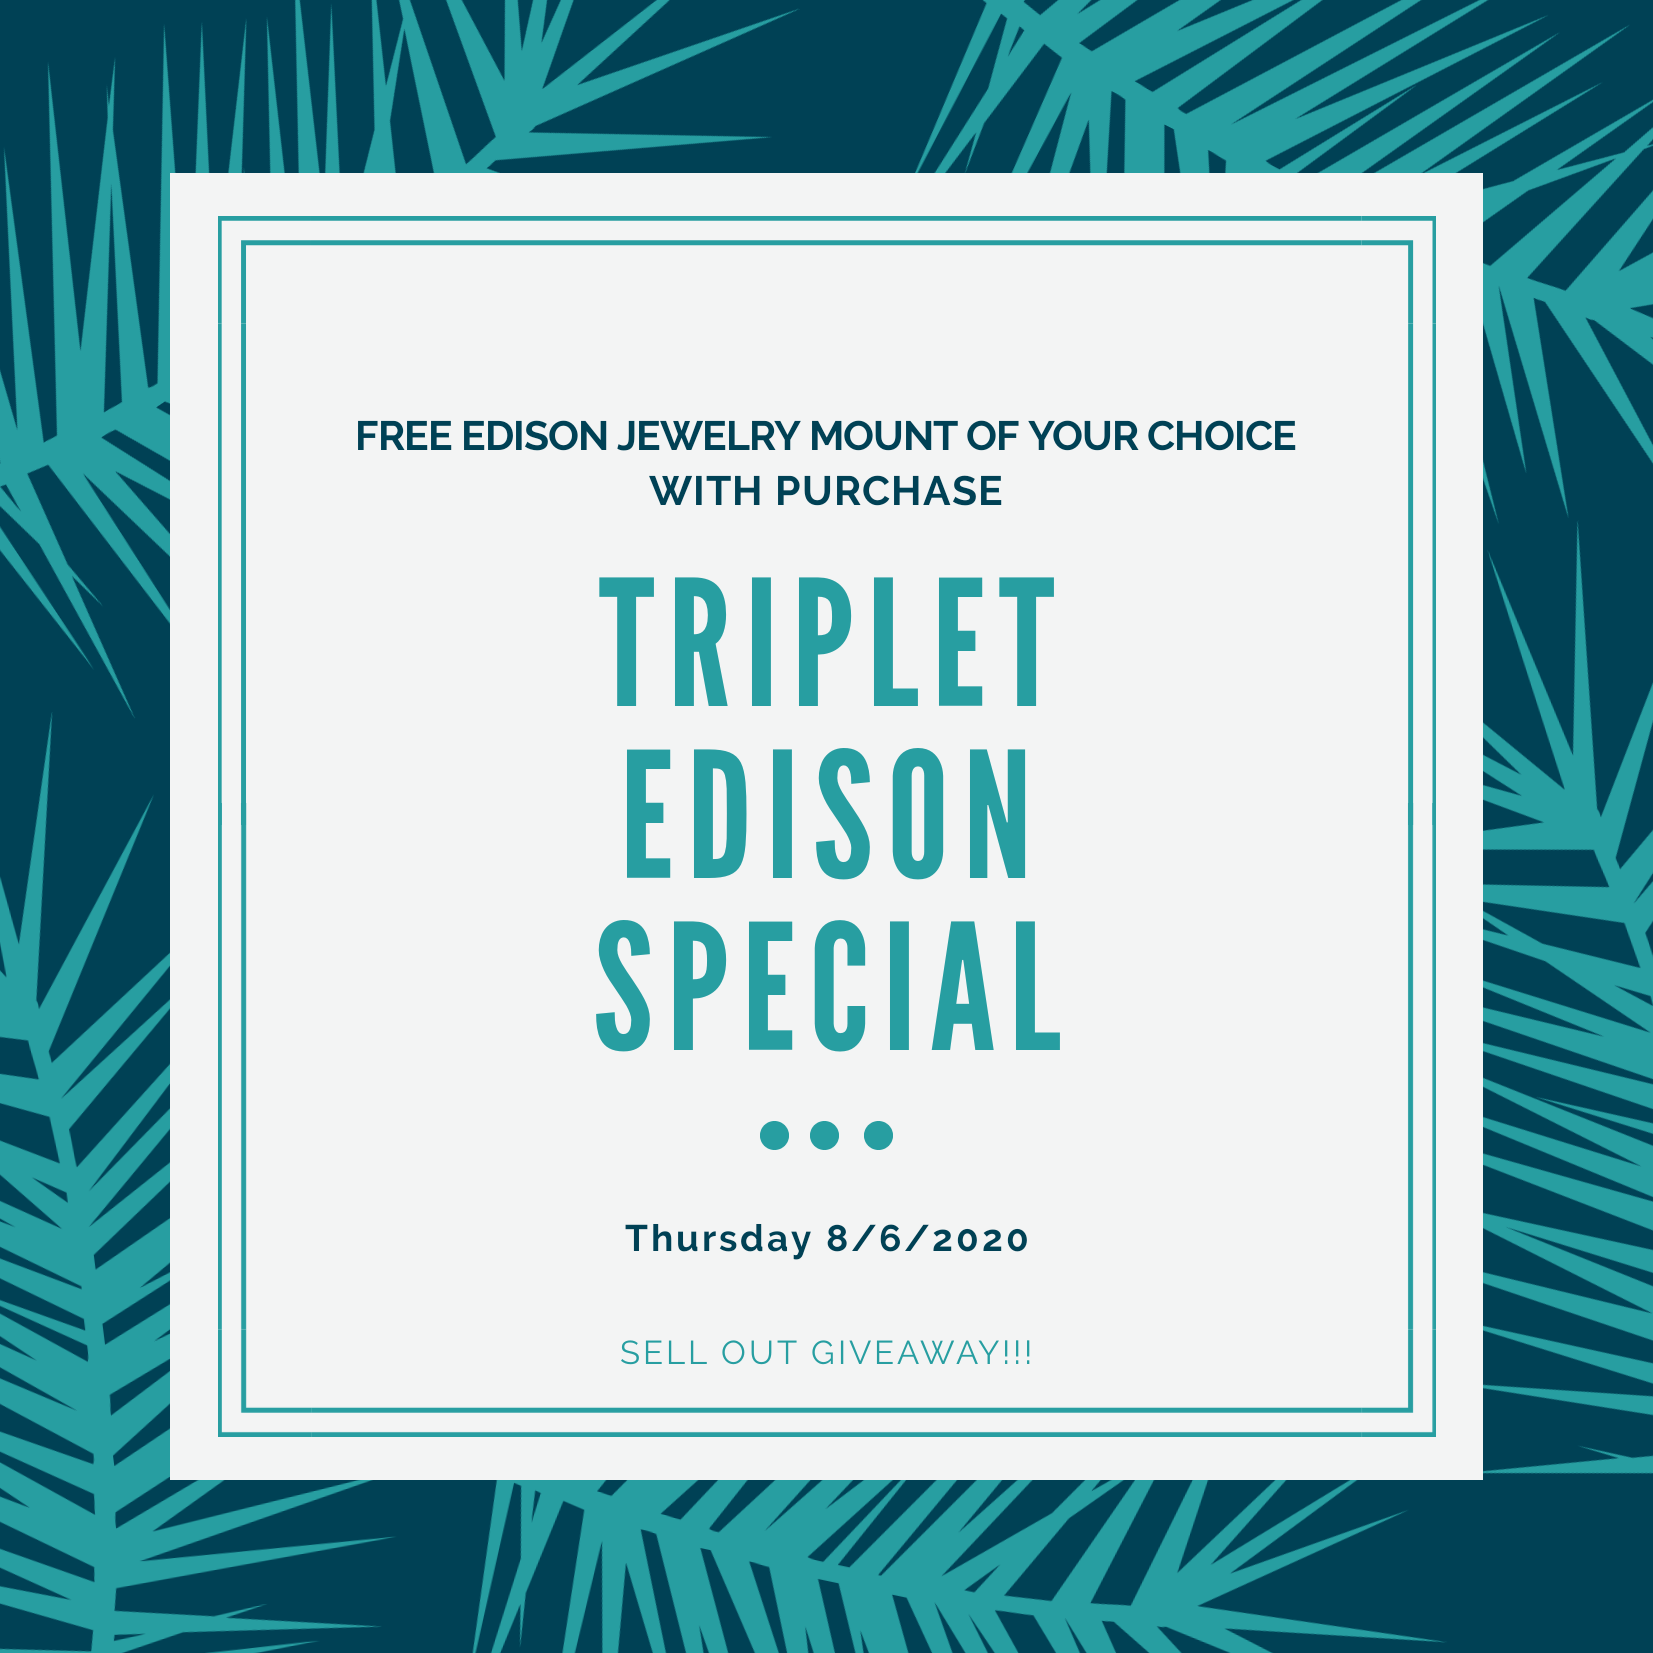 Triplet Edsion Special